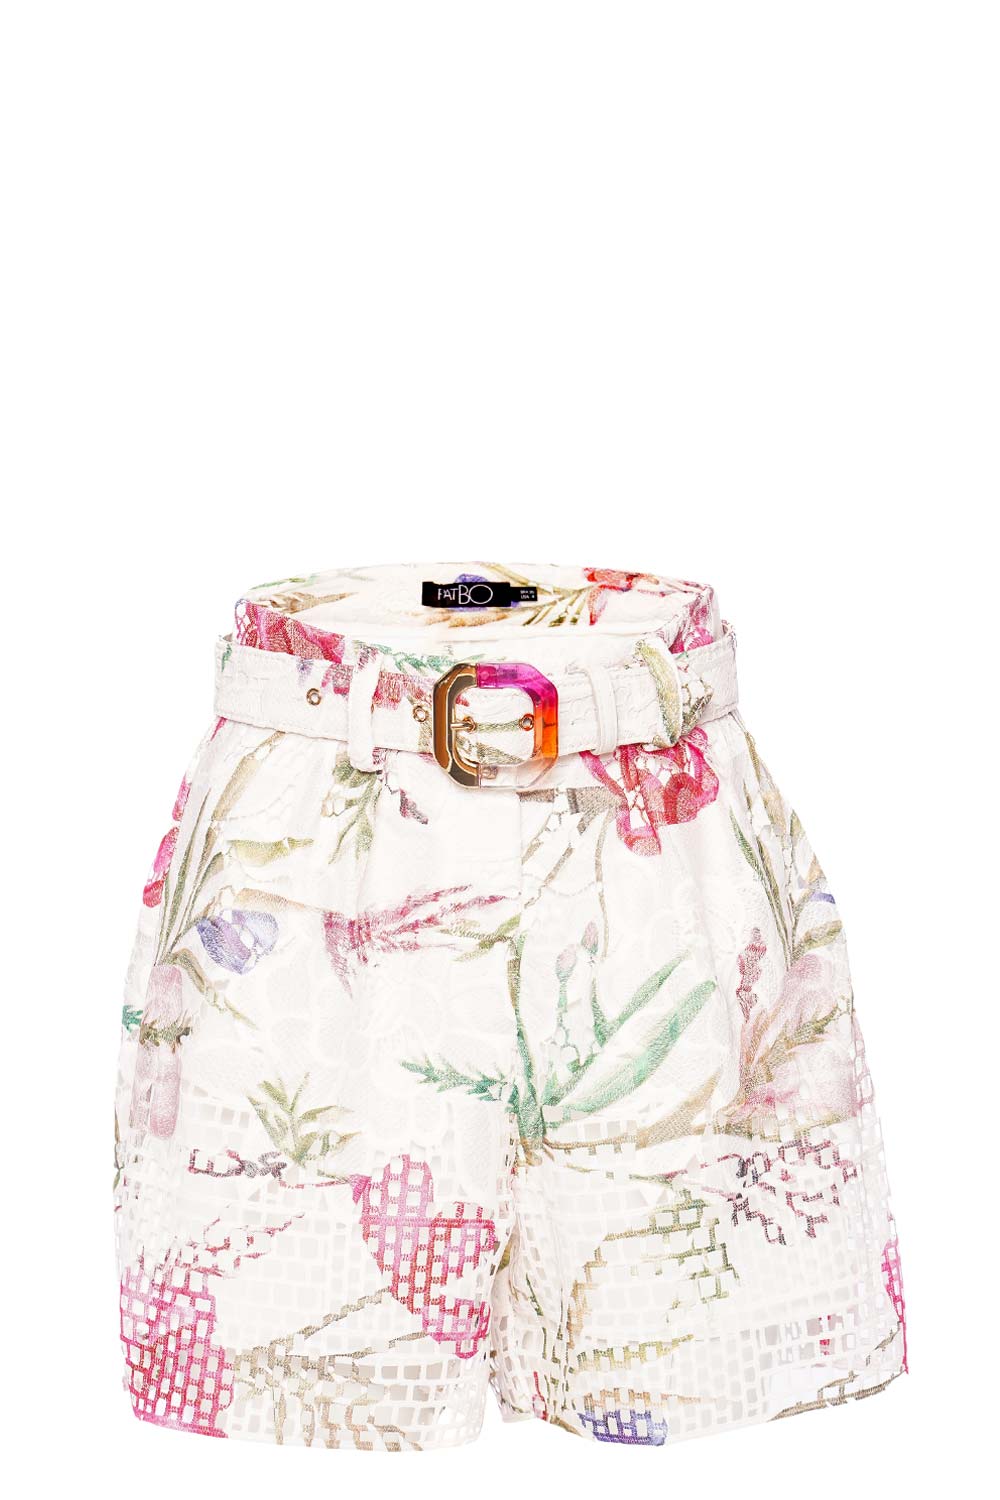 PatBO Viera White Floral Lace Shorts